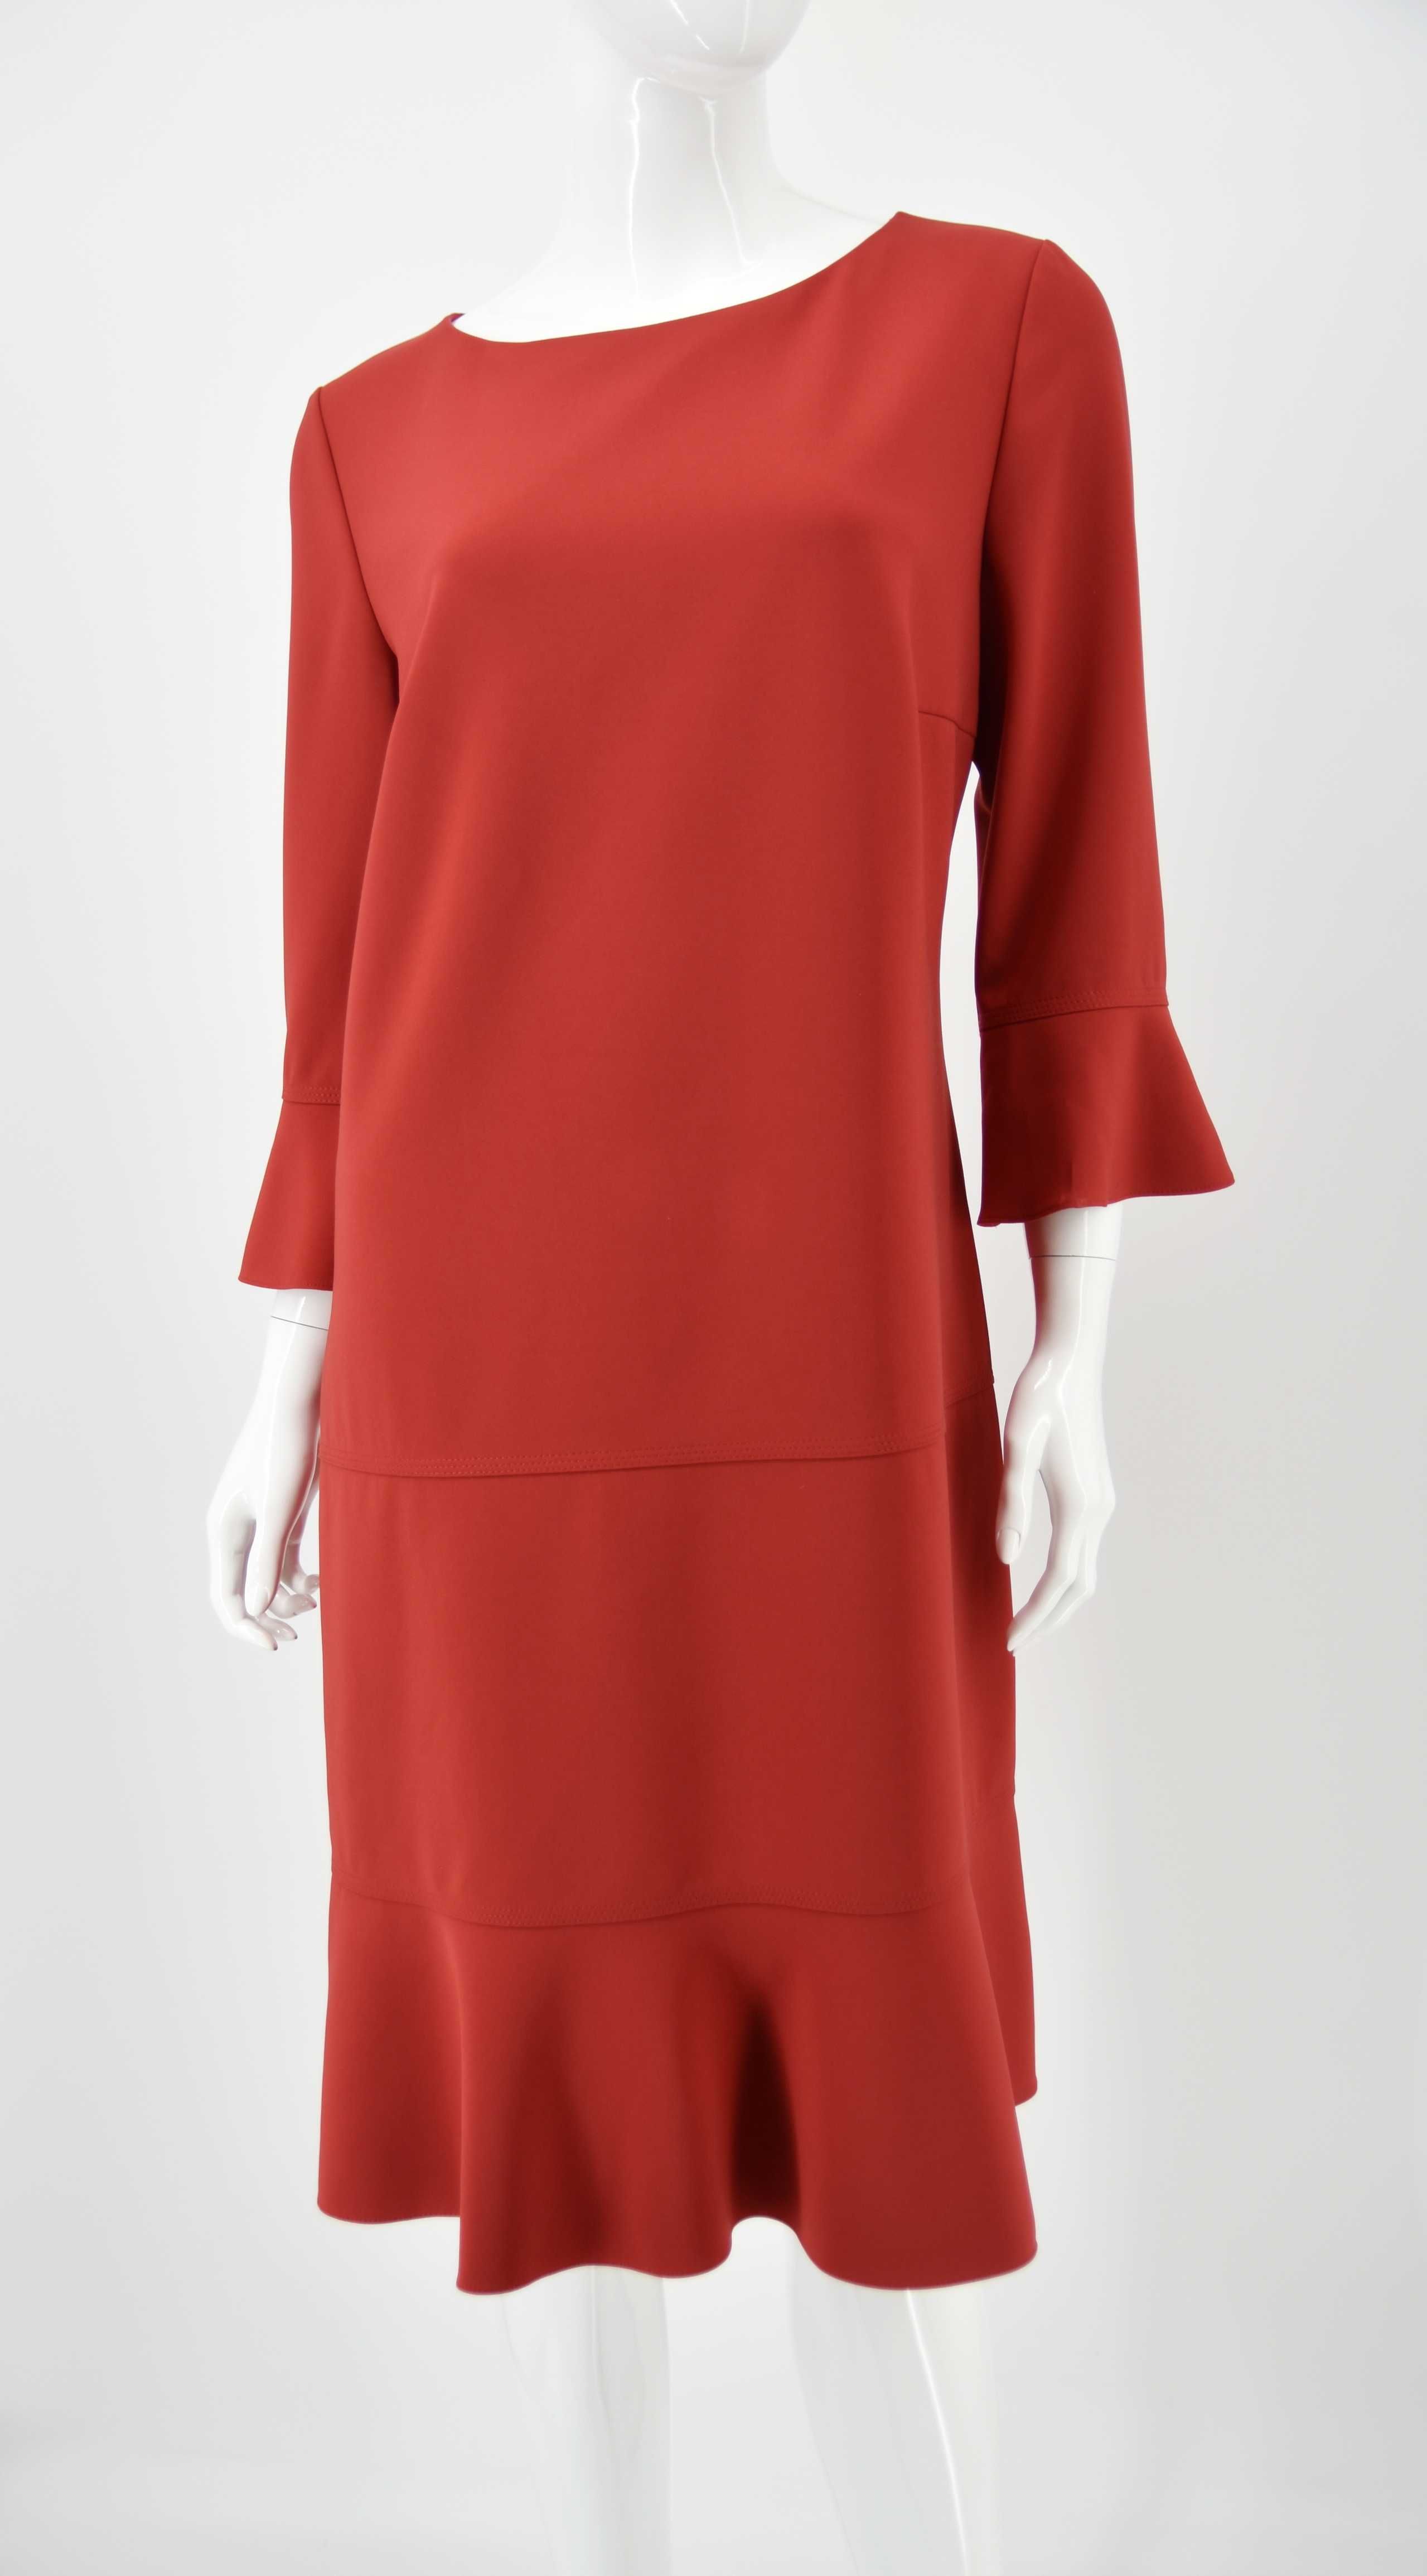 HUGO BOSS sukienka czerwona midi elegancka koktajlowa 42